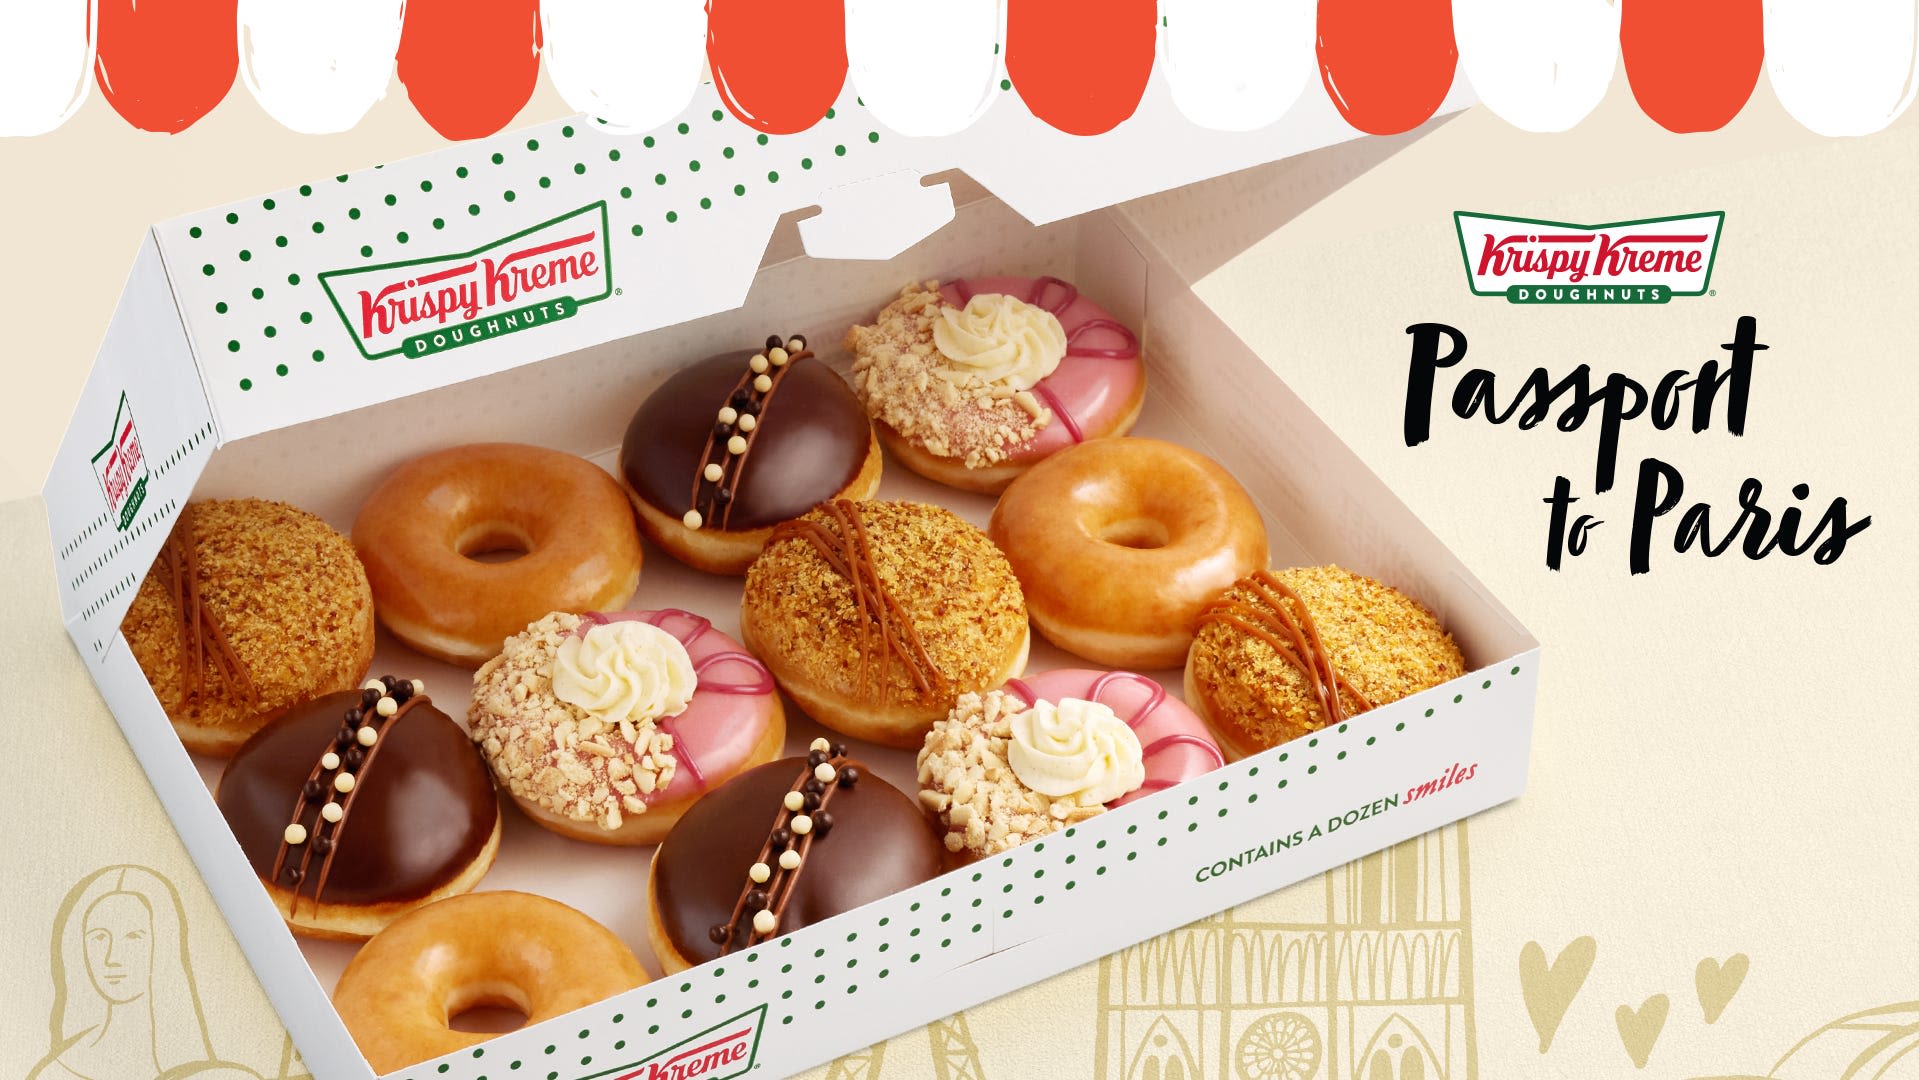 Krispy Kreme unveils new Paris-inspired doughnut collection ahead of 2024 Olympics